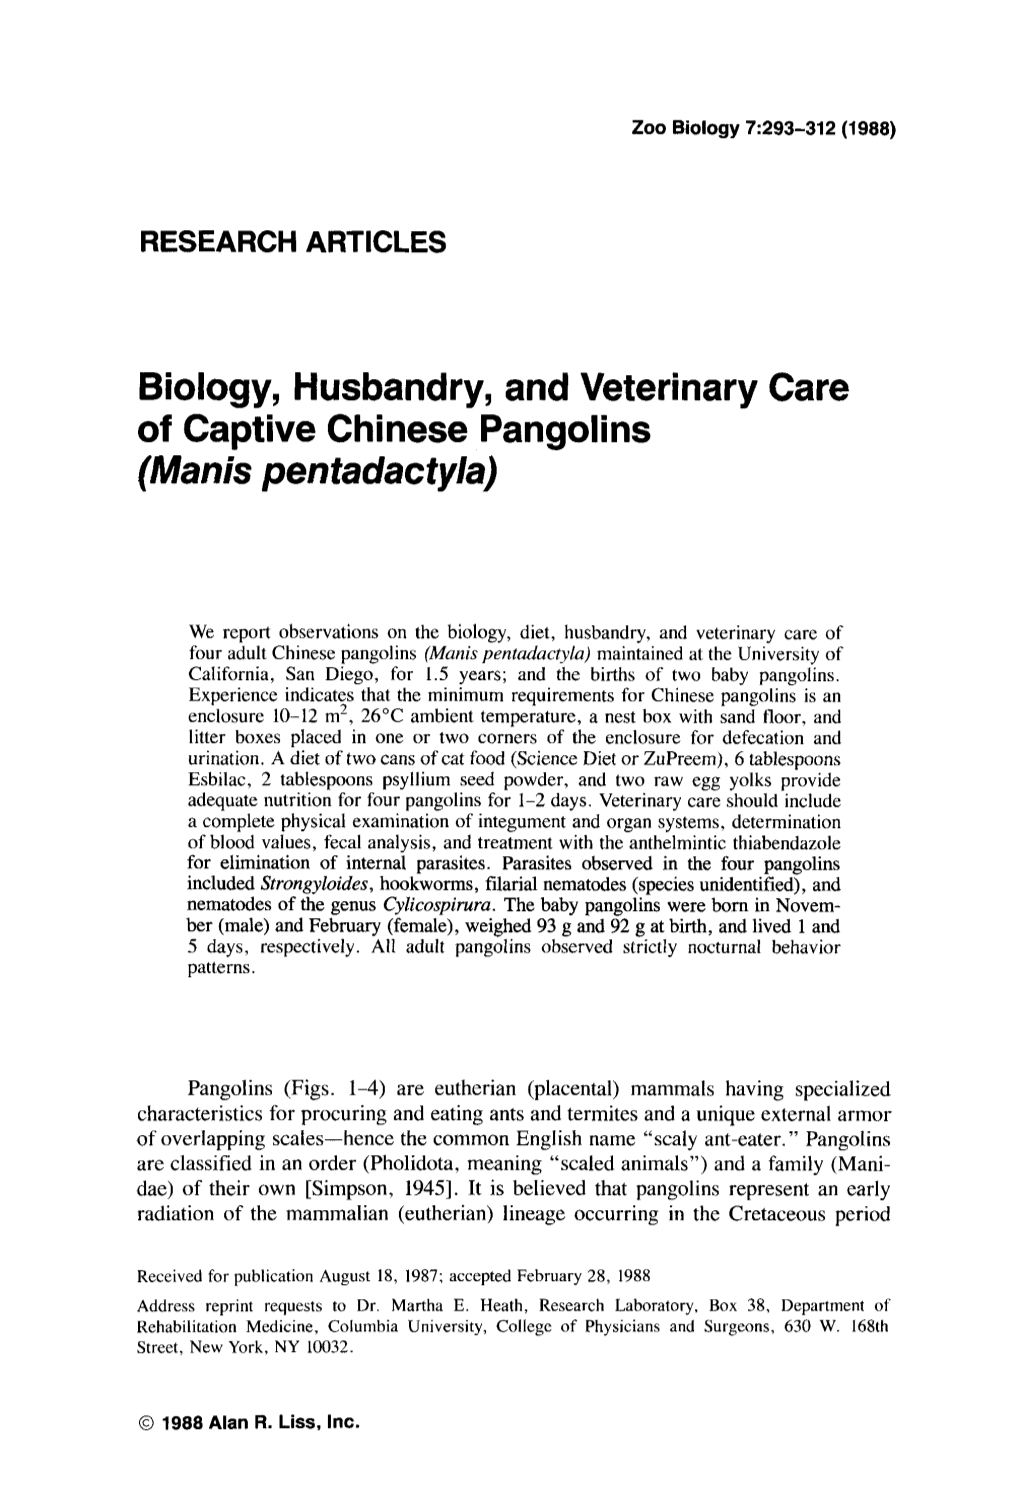 Biology, Husbandry, and Veterinary Care of Captive Chinese Pangolins (Manis Pentadactyla)